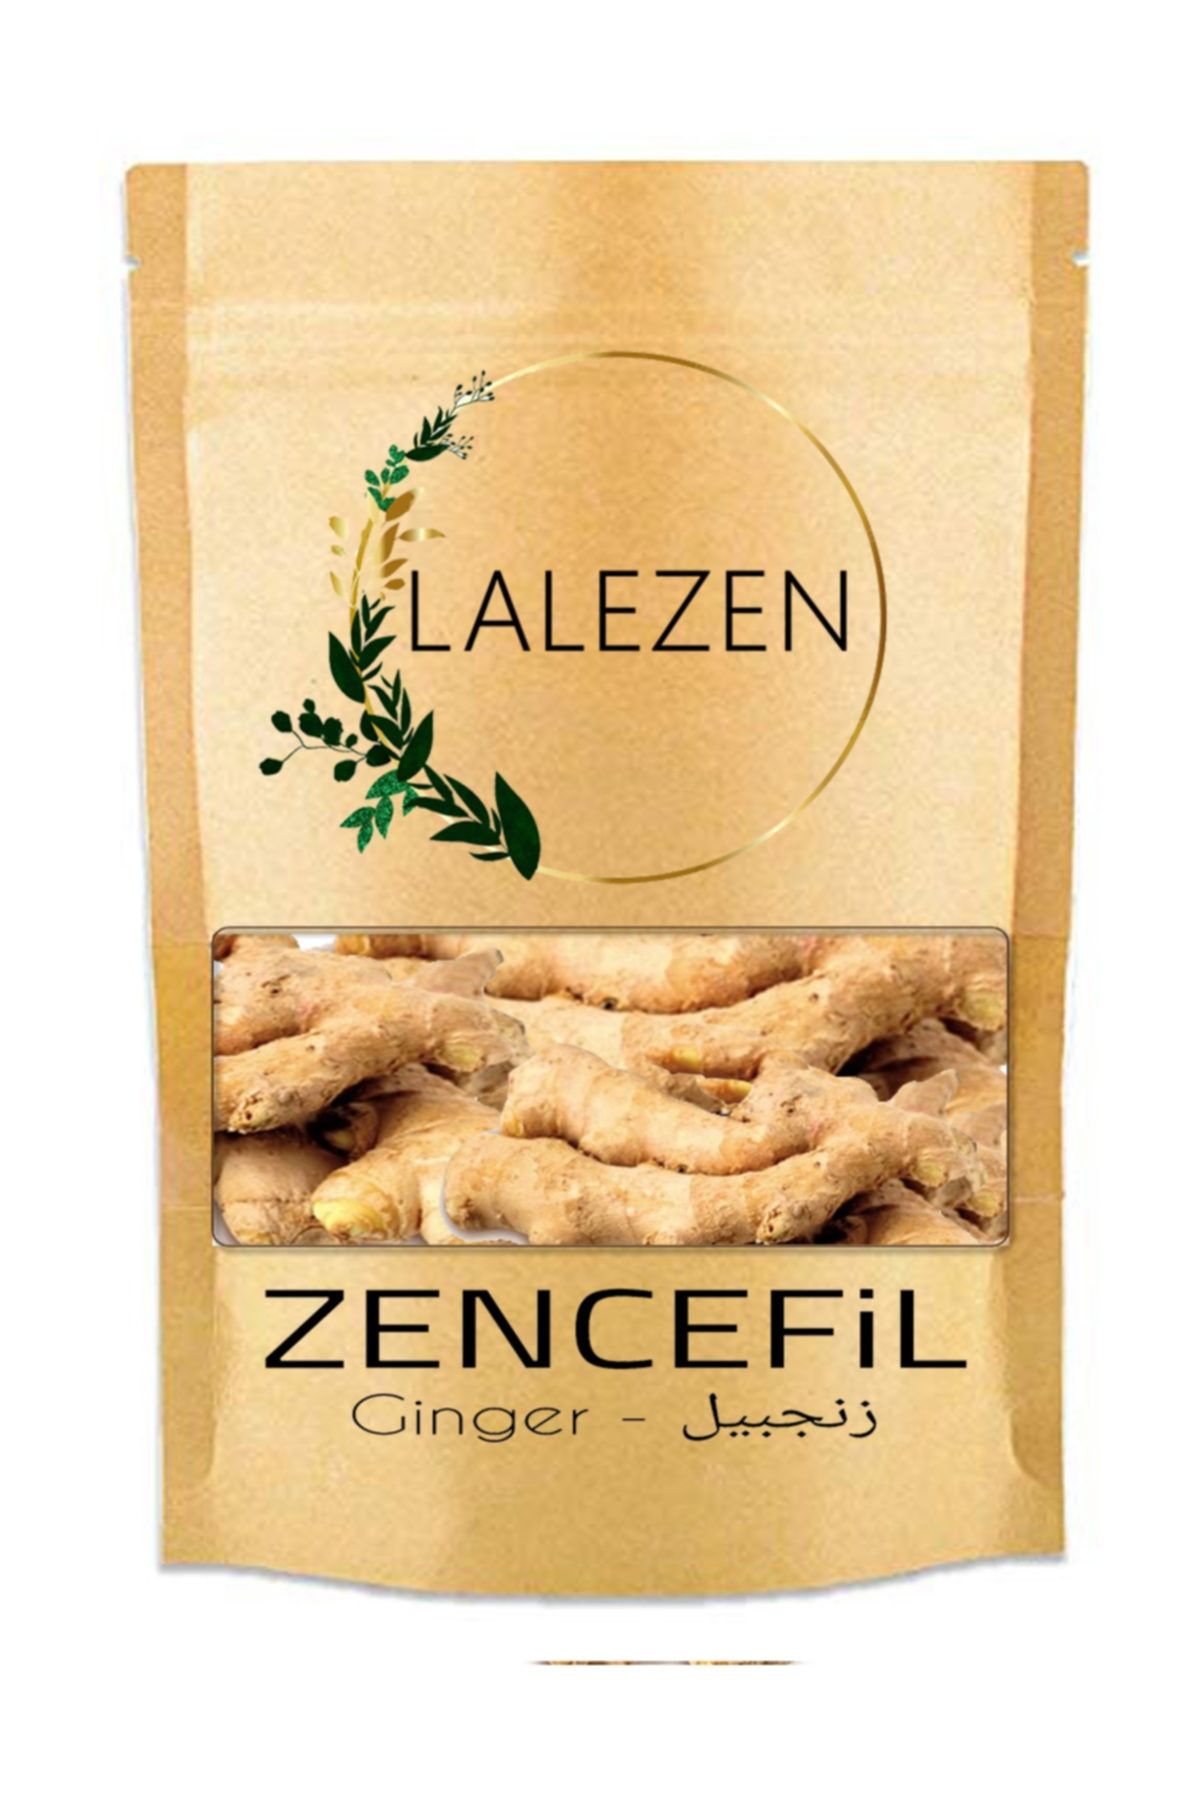 LALEZEN Taze Zencefil 250 G - Ginger